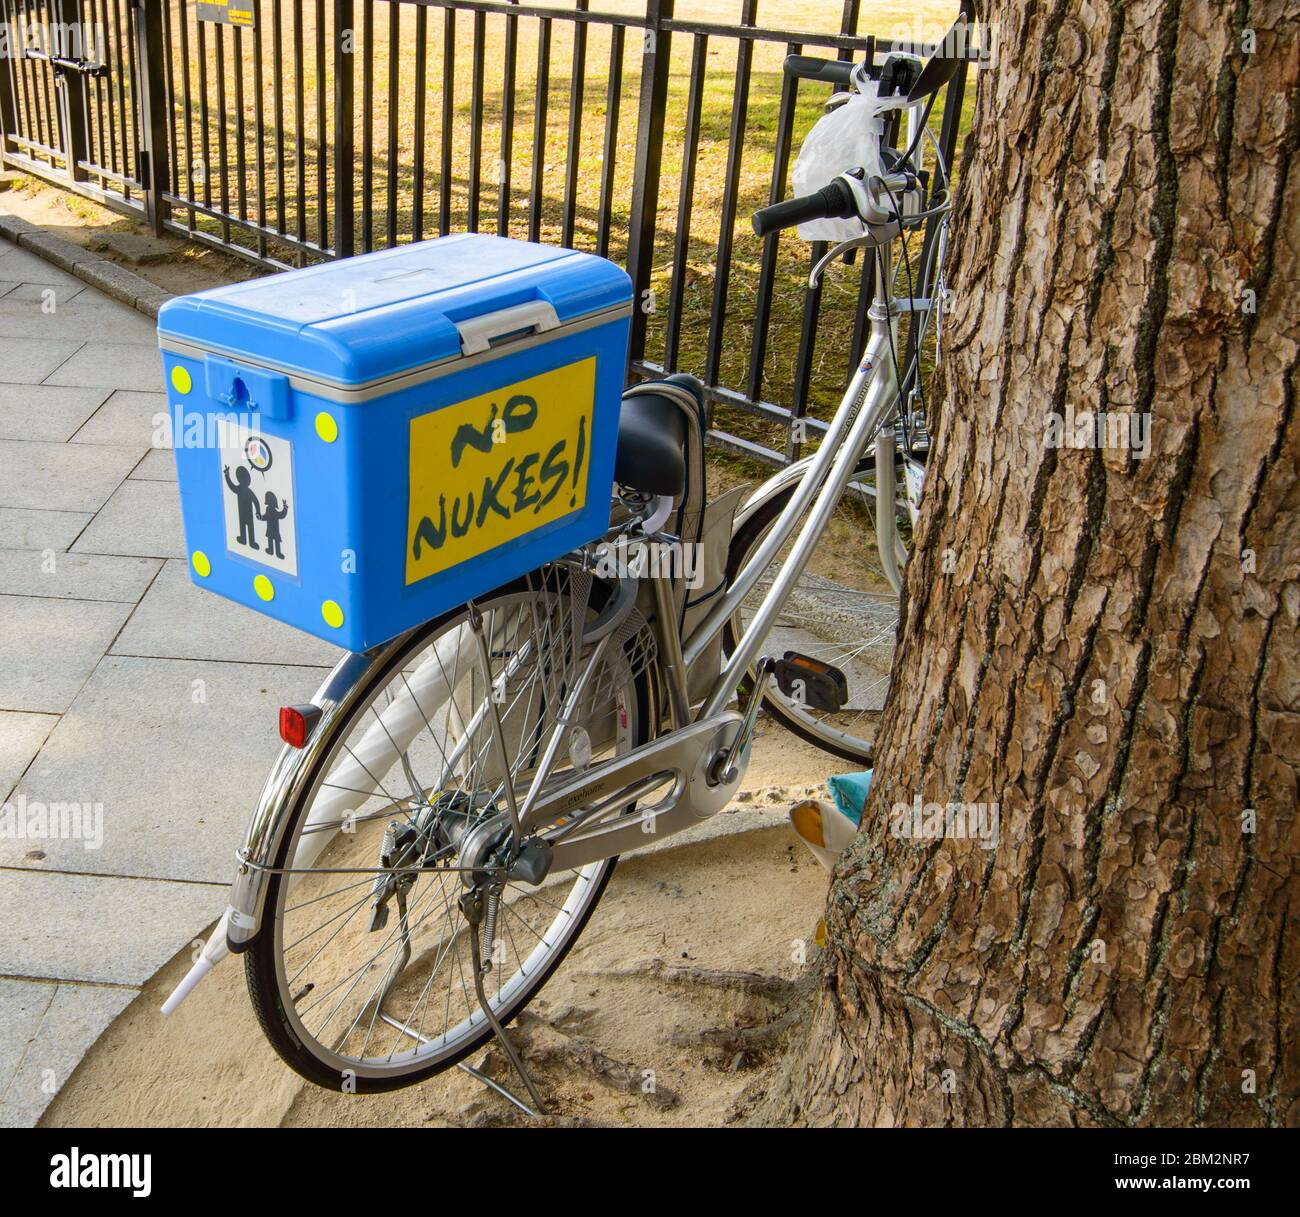 Hiroshima / Japan - 21. Dezember 2017: Fahrrad in Hiroshima, verziert mit dem Text "Keine Nukes", steht für antinuklear Bewegung in Hiroshima, Japan Stockfoto